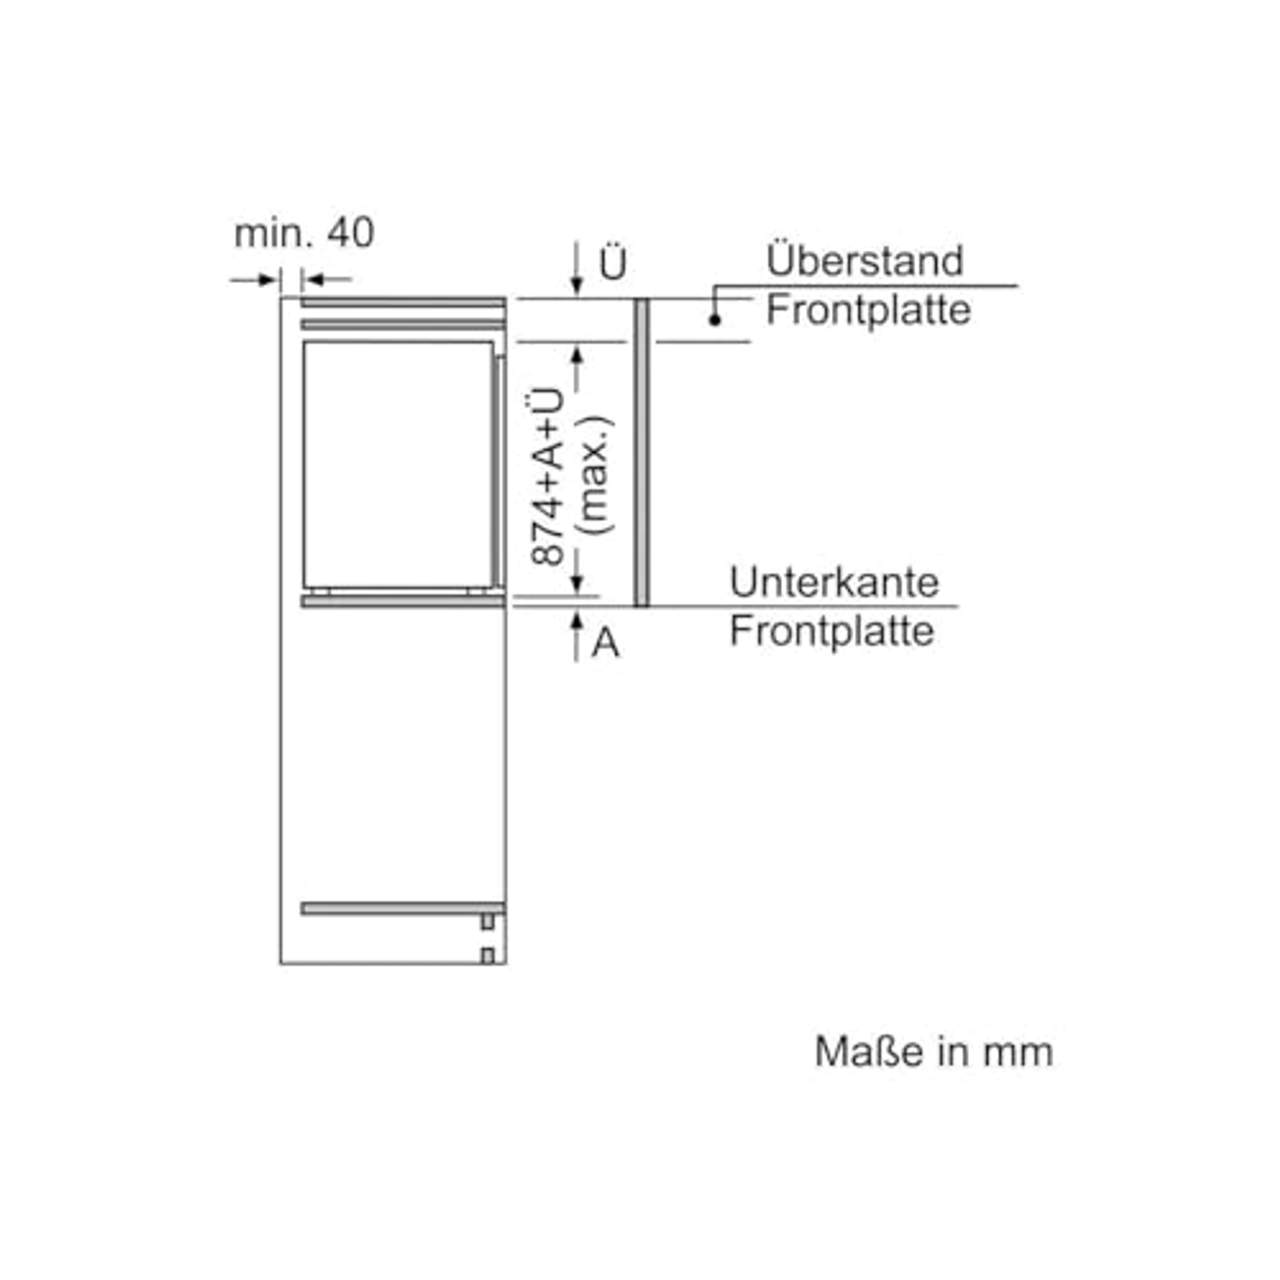 Siemens KI21RADD1 Einbau-Kühlschrank iQ500